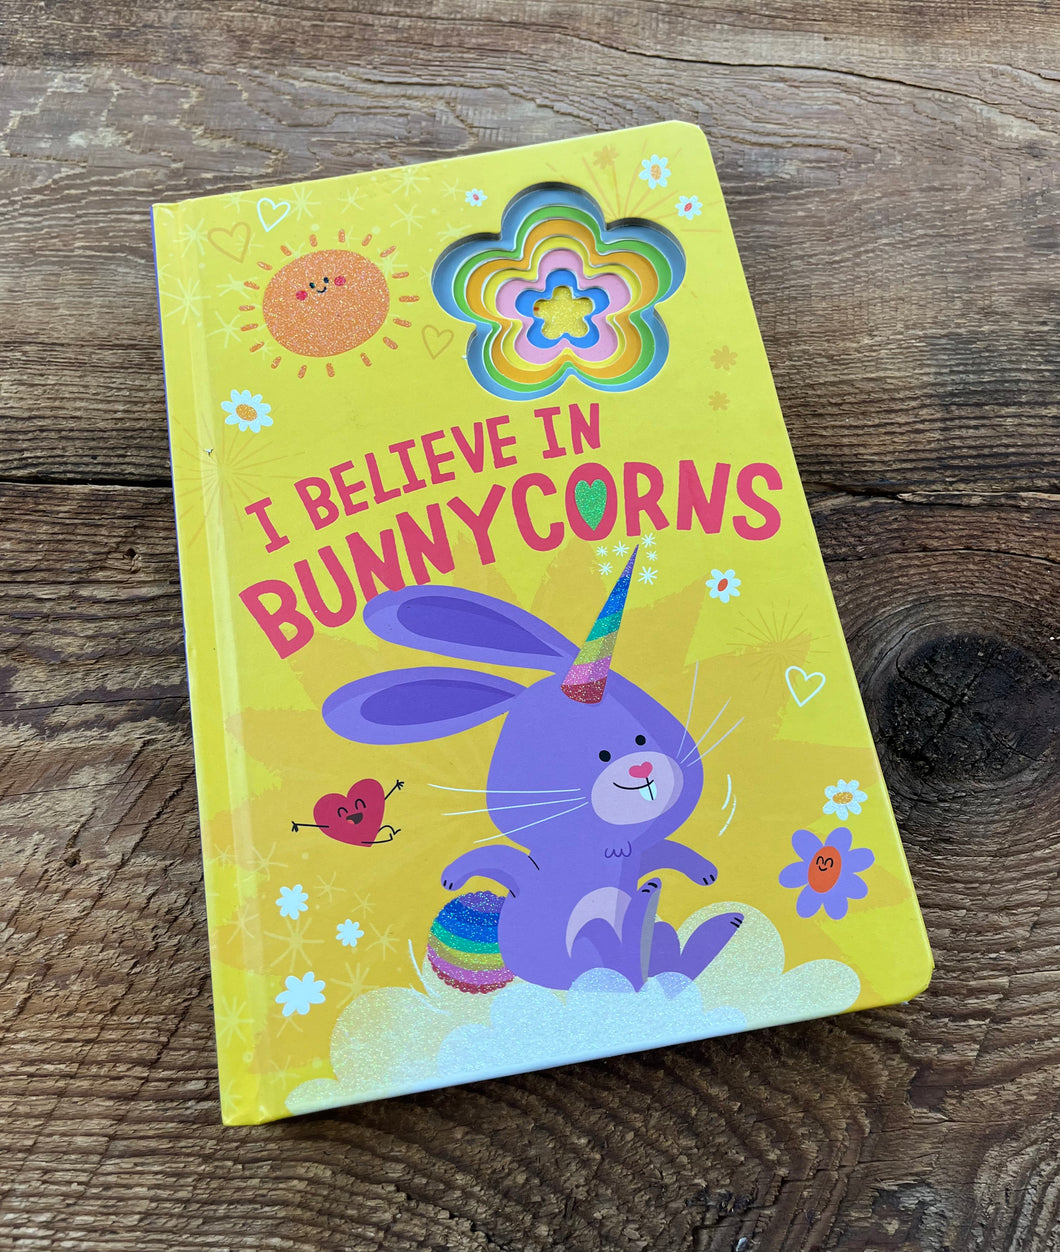 I Believe in Bunnycorns Book